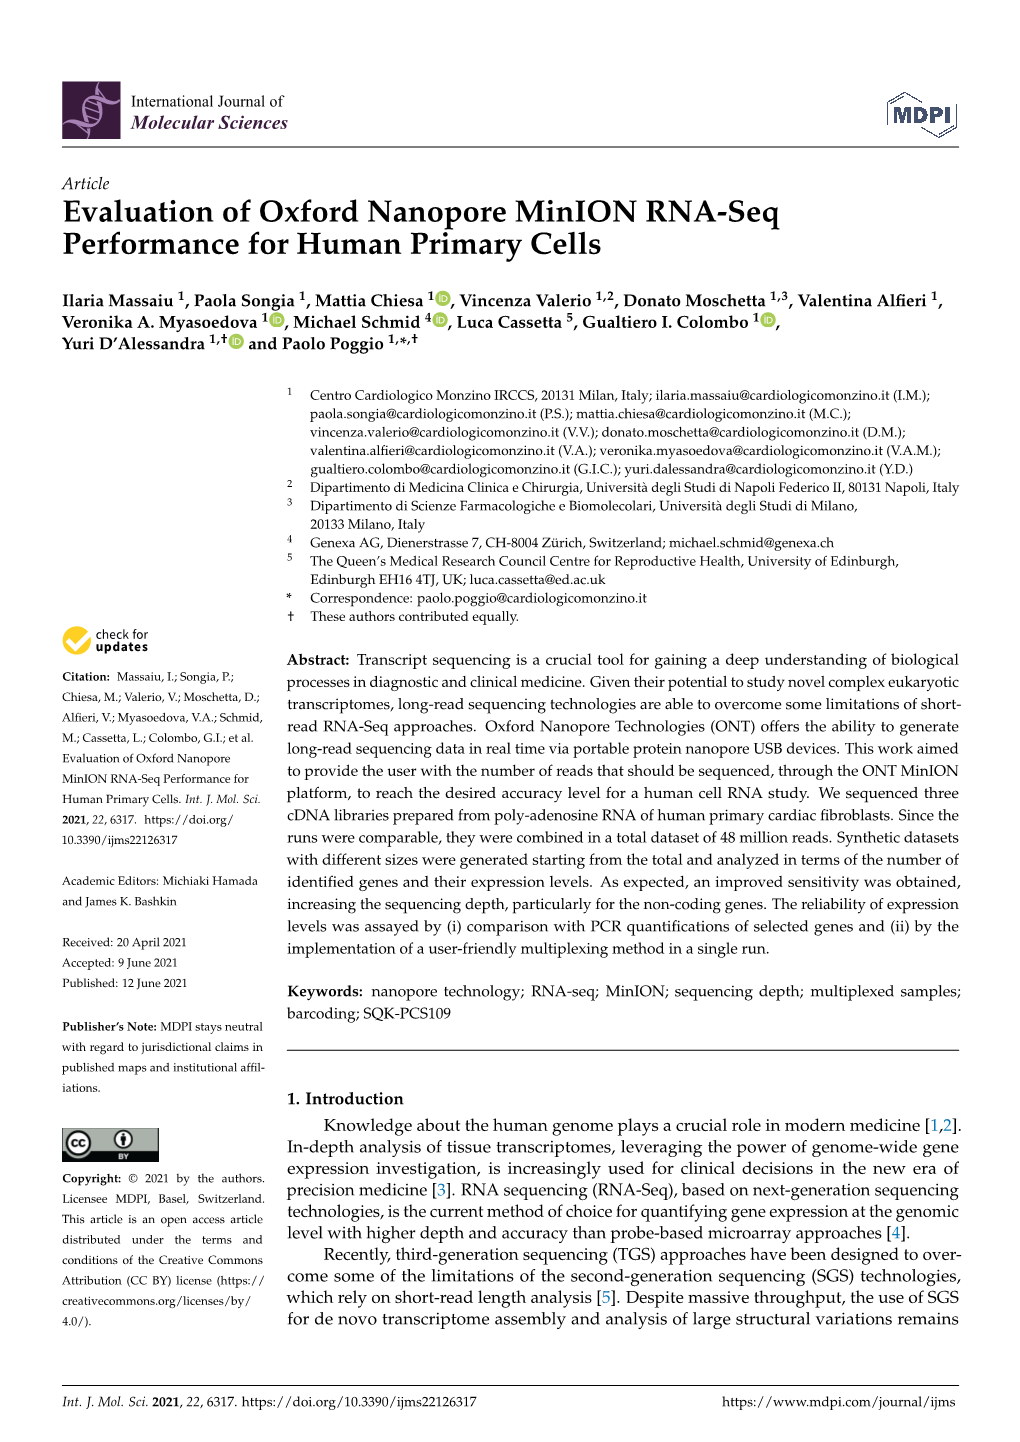 Evaluation of Oxford Nanopore Minion RNA-Seq Performance for Human Primary Cells